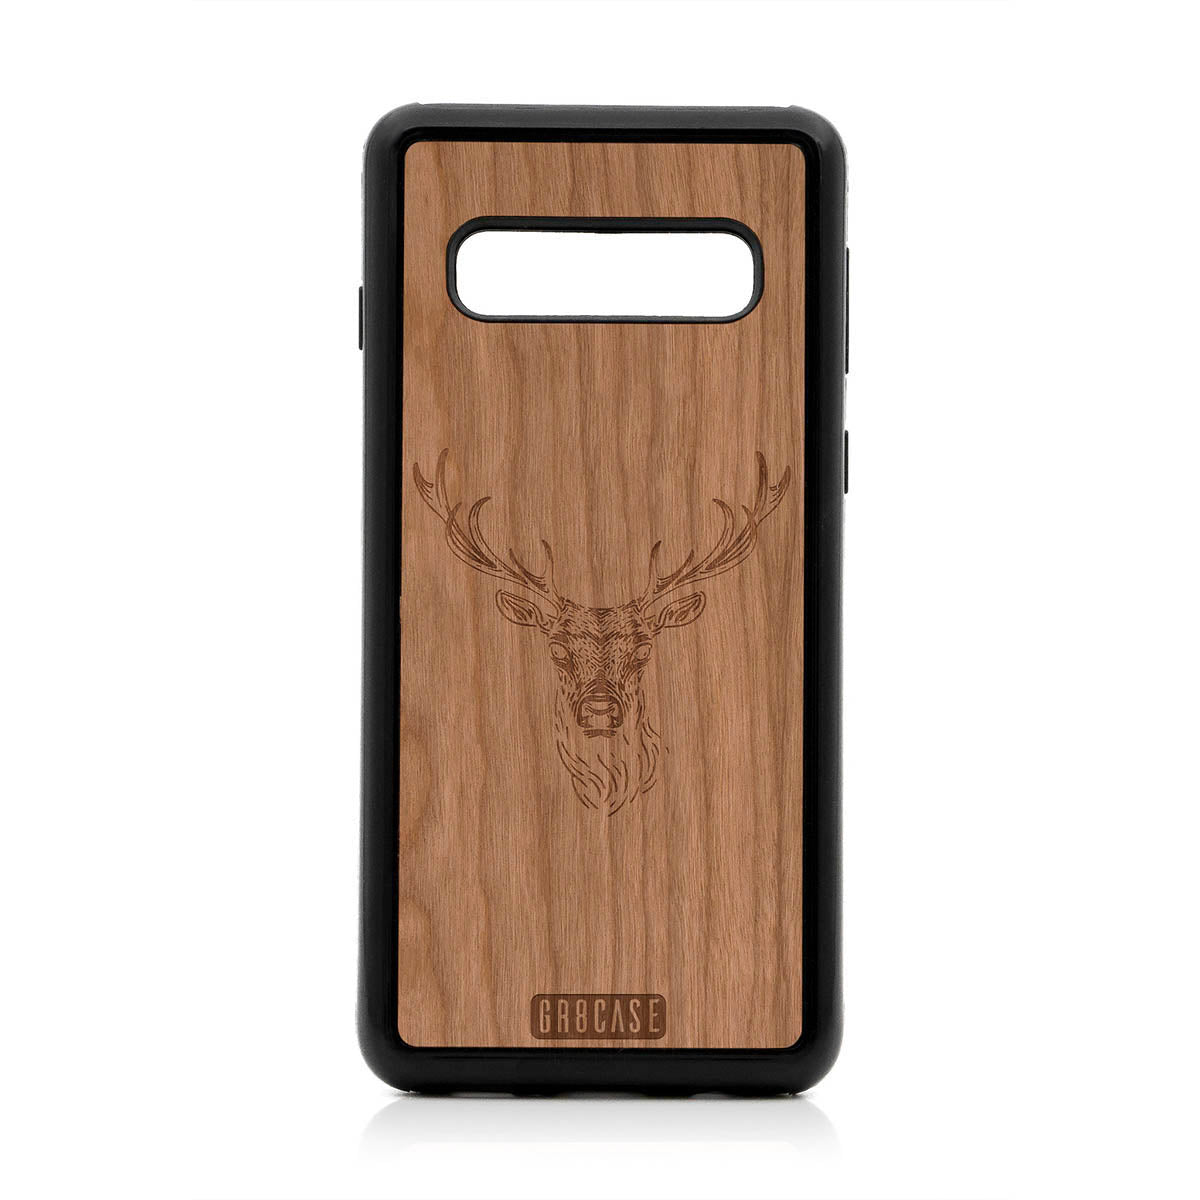 Elk Buck Design Wood Case For Samsung Galaxy S10 by GR8CASE